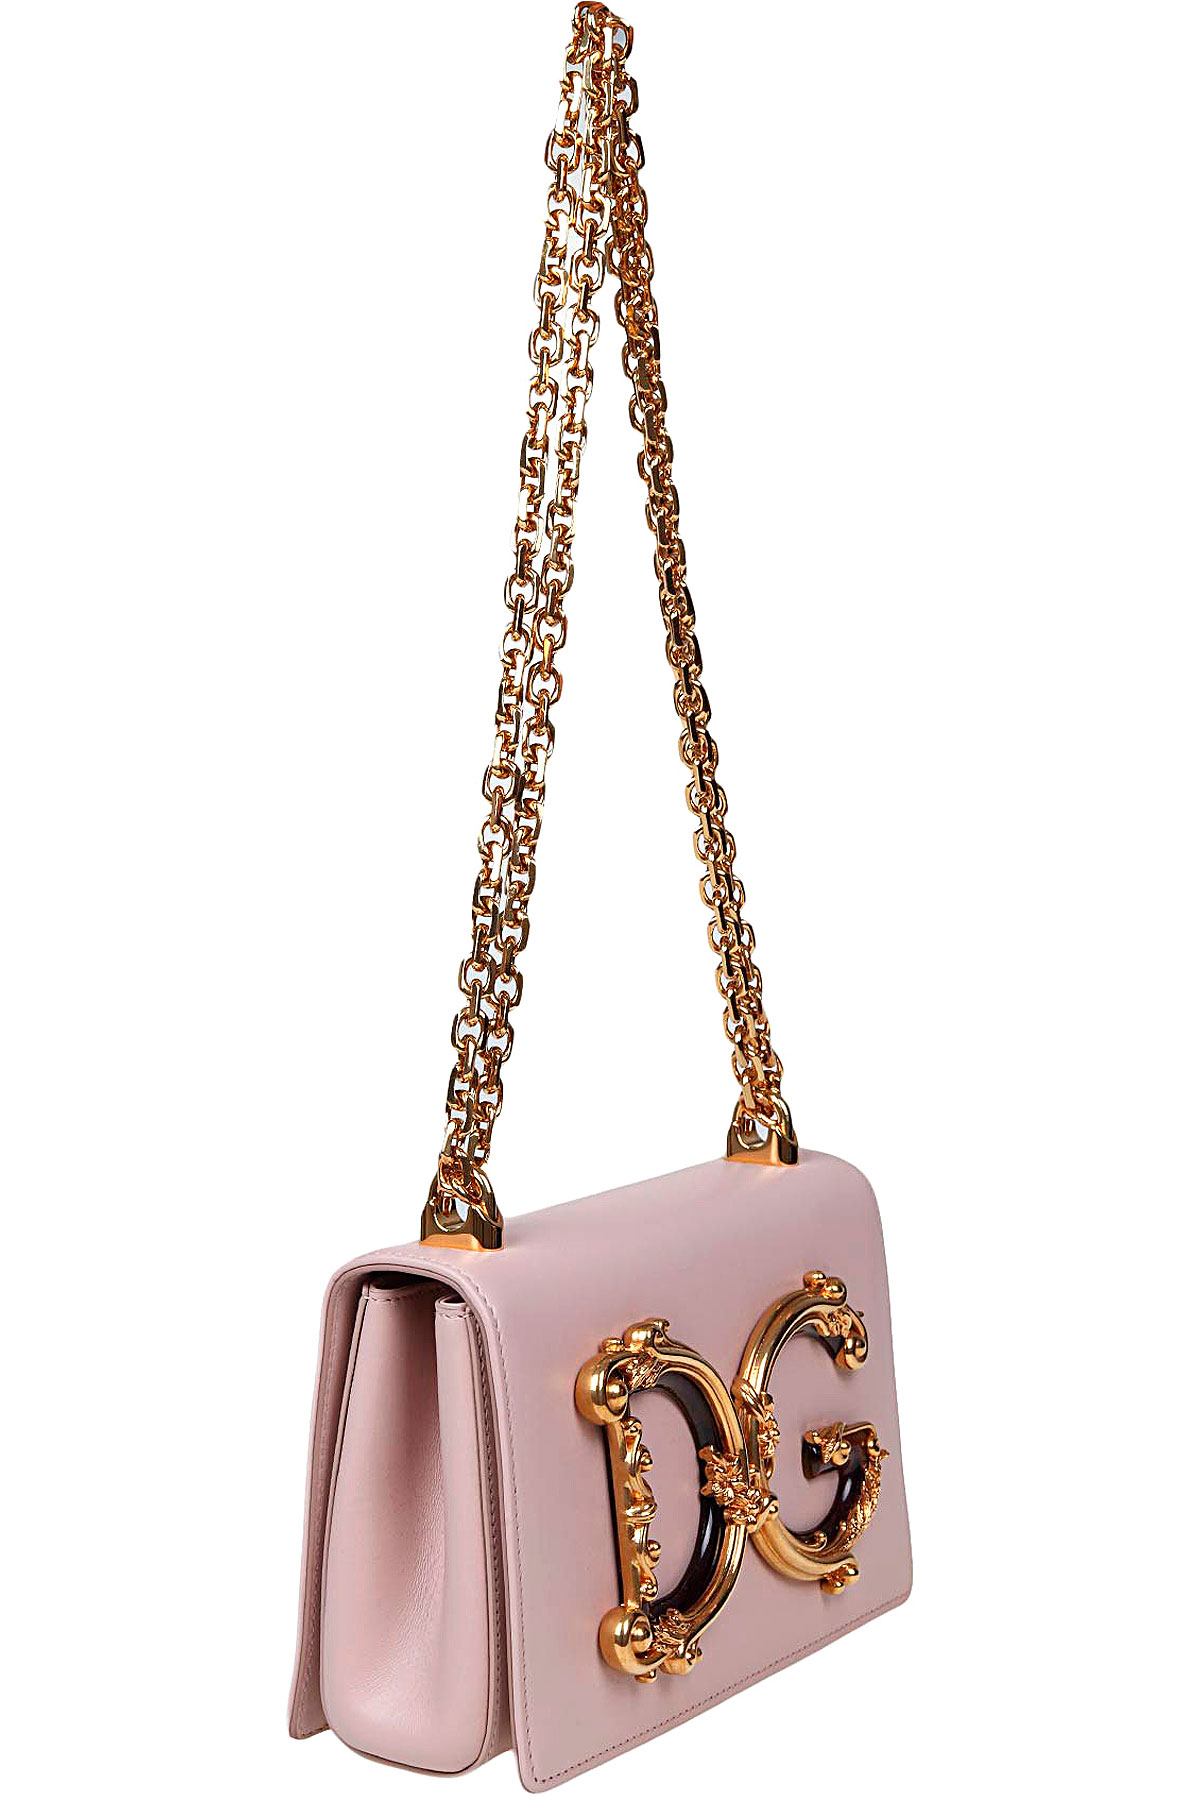 Handbags Dolce & Gabbana, Style code: bb6498-az801-80412